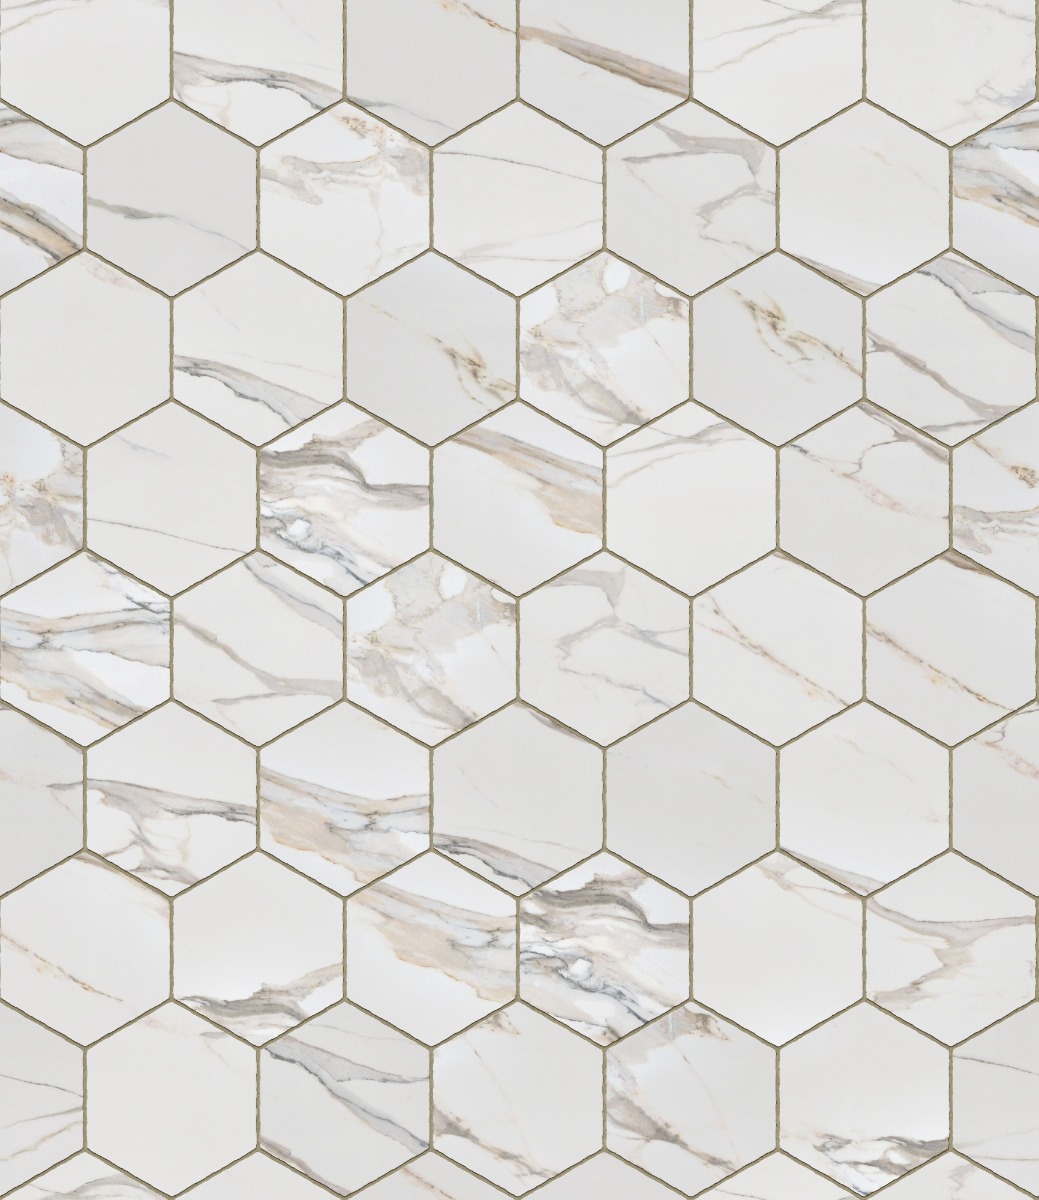 A seamless stone texture with calacatta gold blocks arranged in a Hexagonal pattern